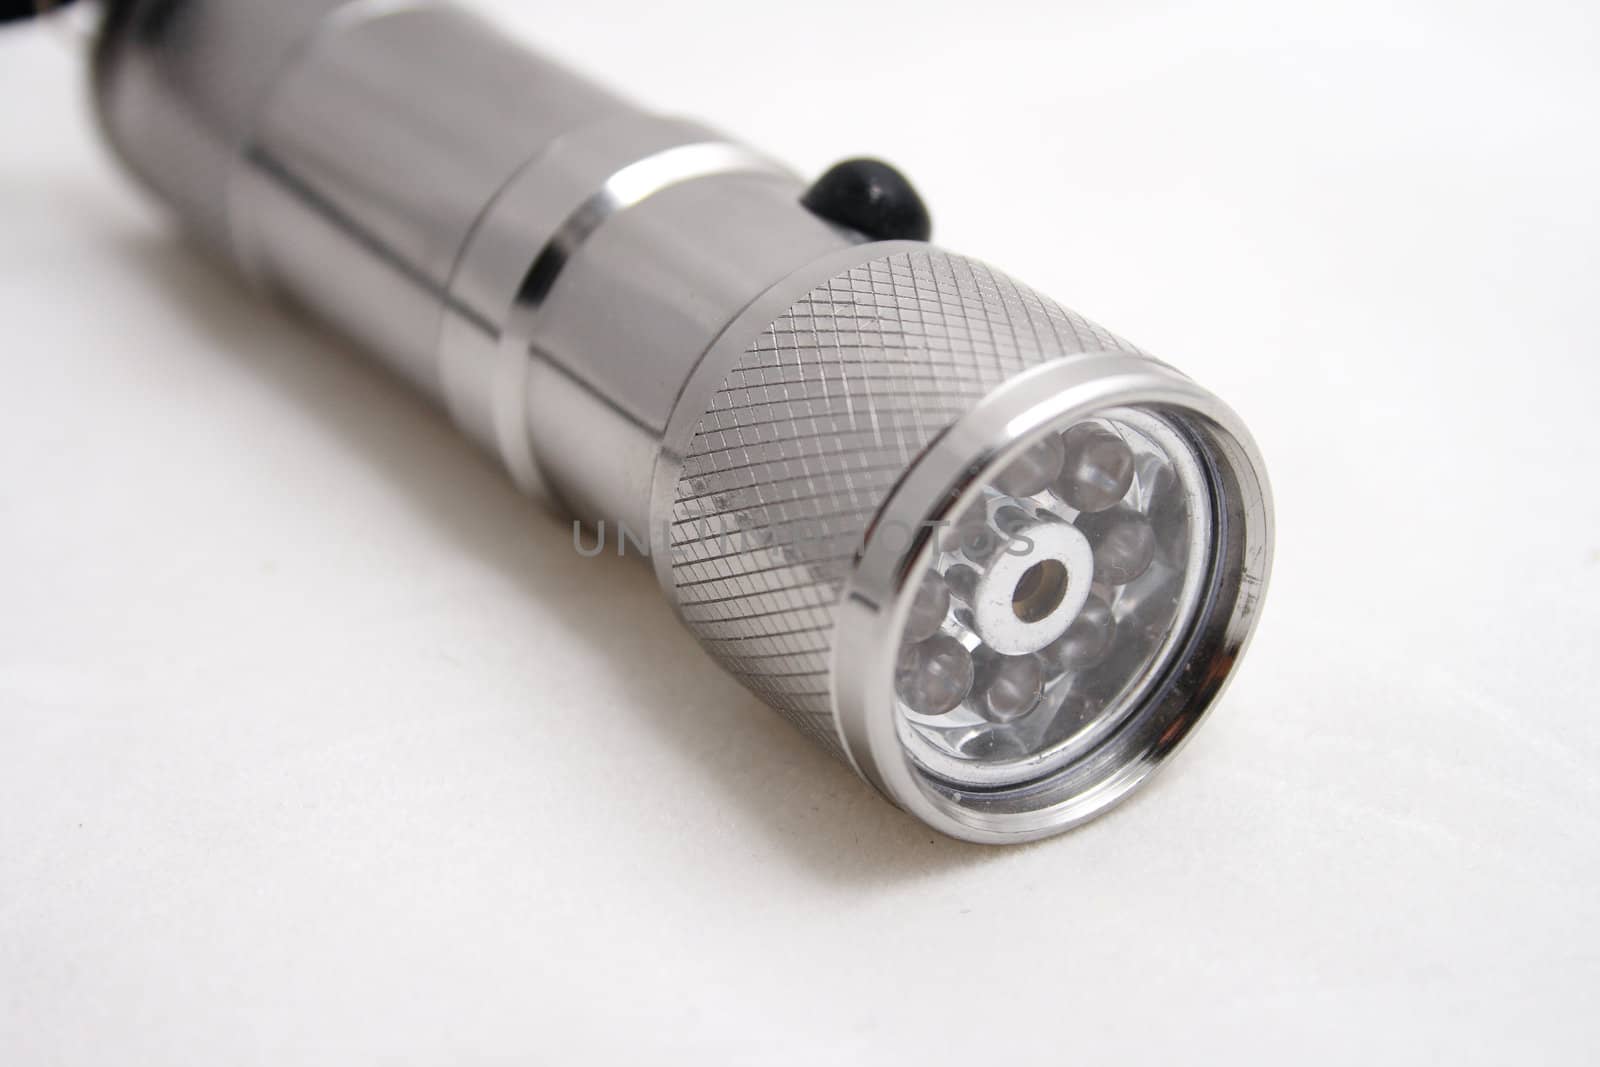 LED flashlight by BengLim